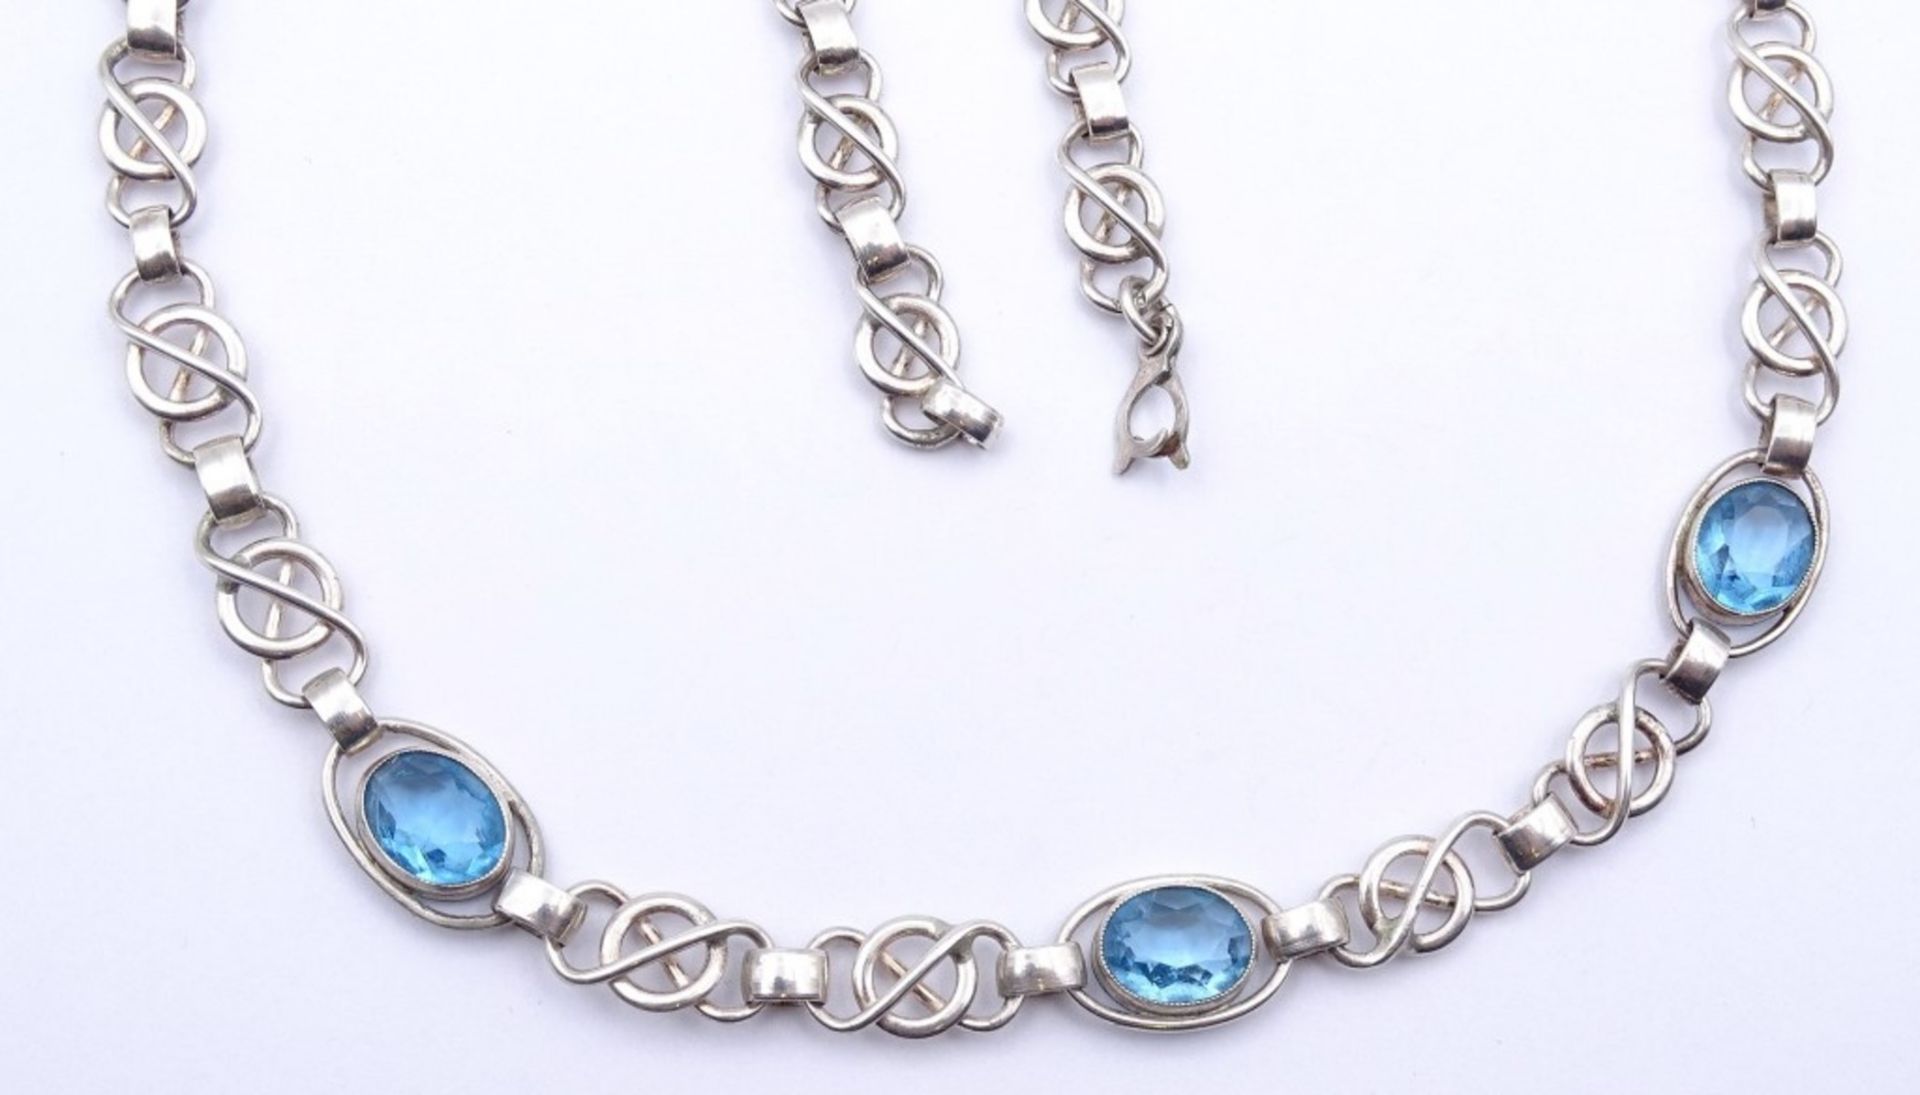 Halskette mit 3 oval facc.Blautopase,Silber 0.830, L- 46,5cm, 22,5gr. - Image 2 of 2